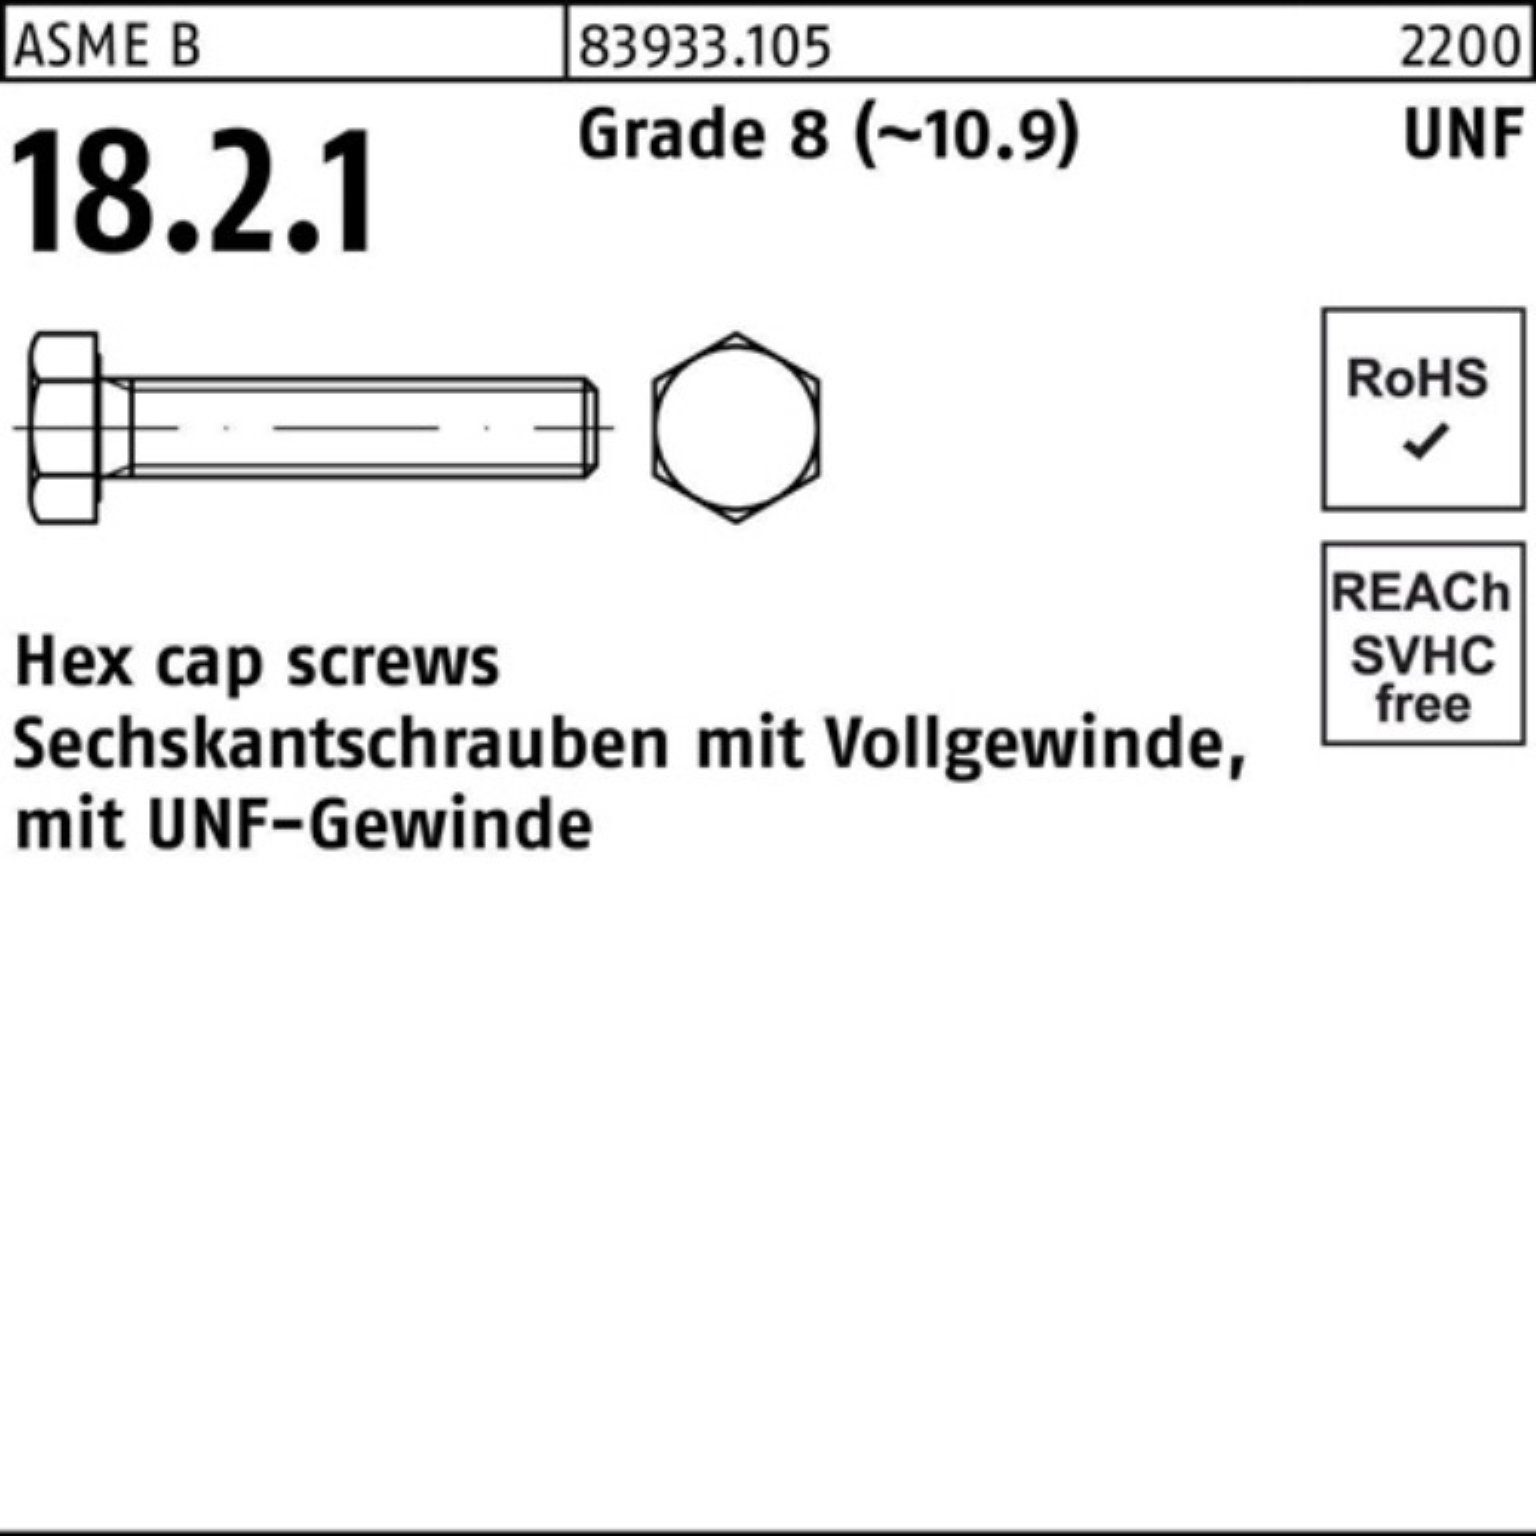 Reyher VG Grade Sechskantschraube 3/8x 83933 8 100er UNF-Gewinde R Sechskantschraube Pack 7/8